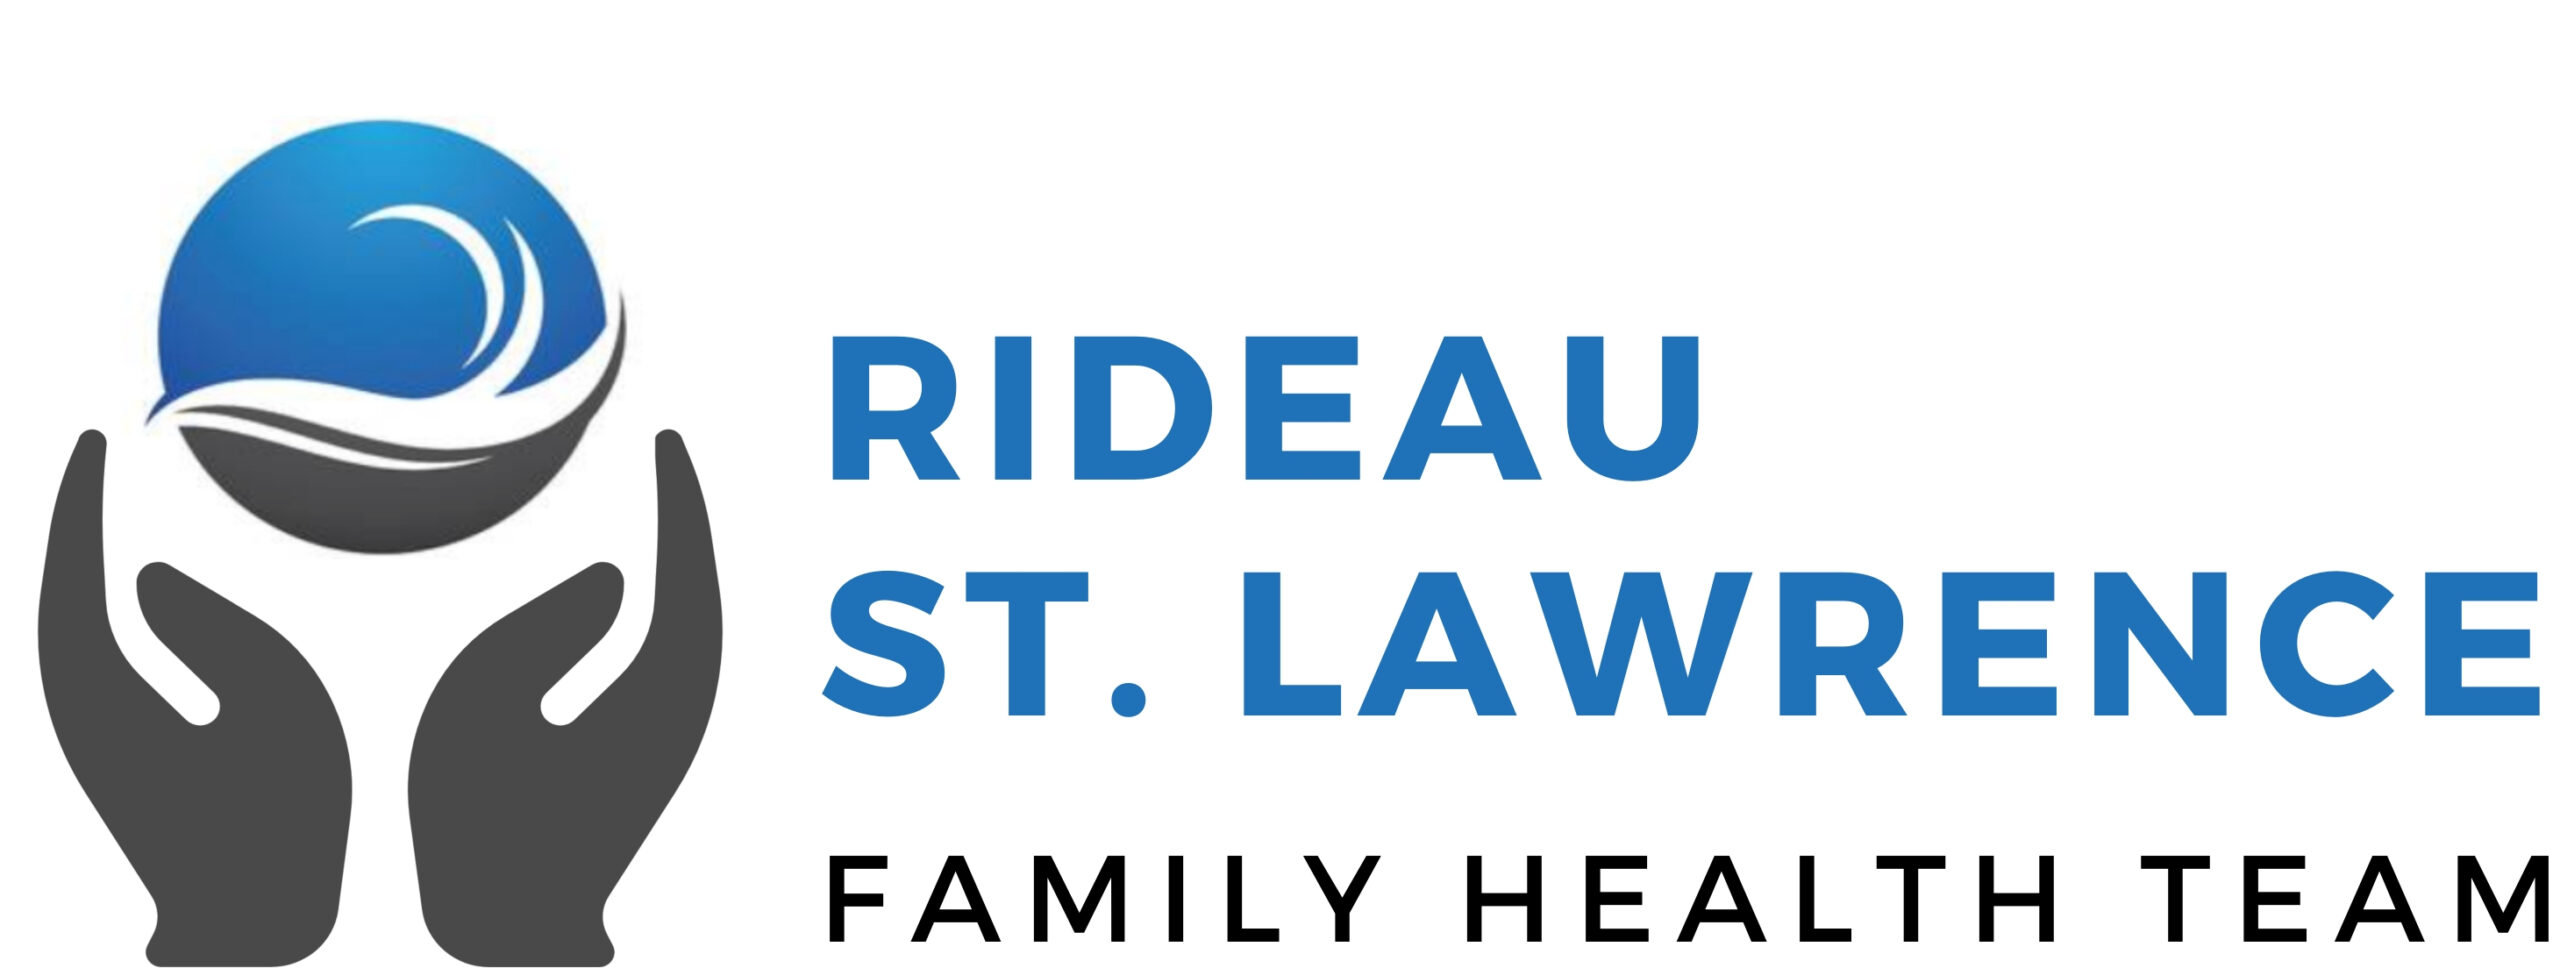 Rideau St. Lawrence Family Health Team